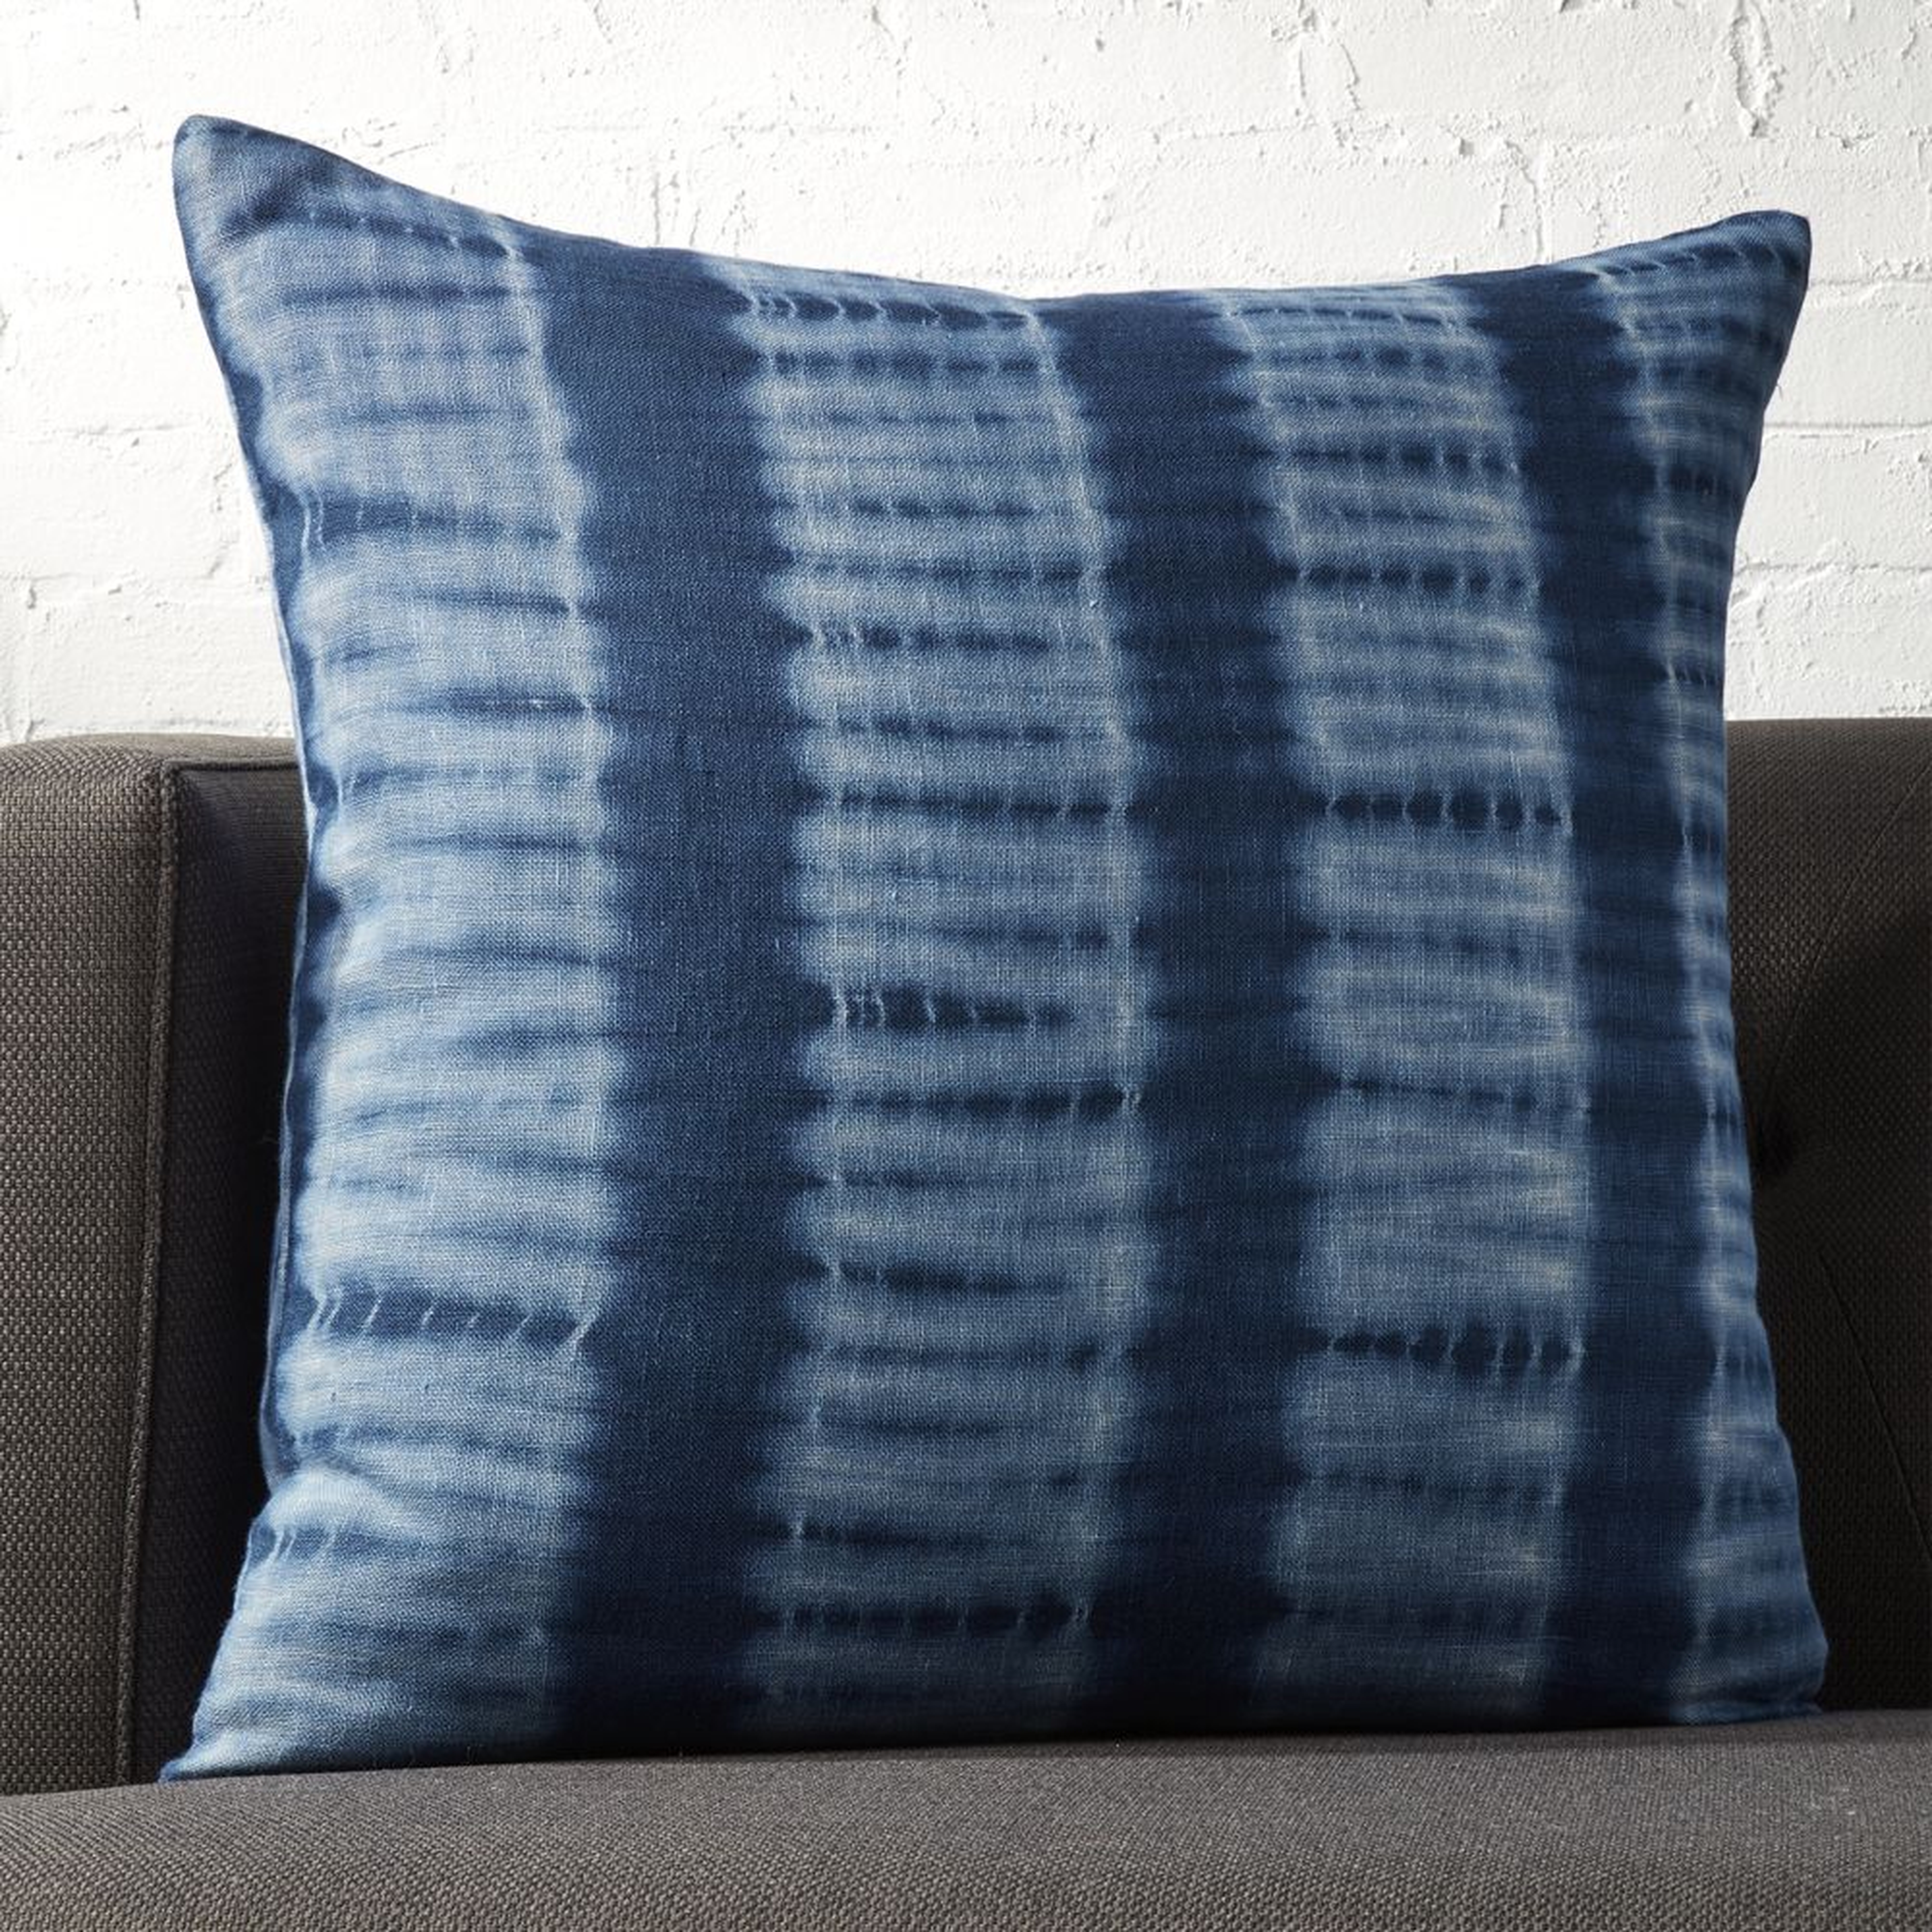 23" Indigo Blue Tie Dye Pillow with Down-Alternative Insert - CB2